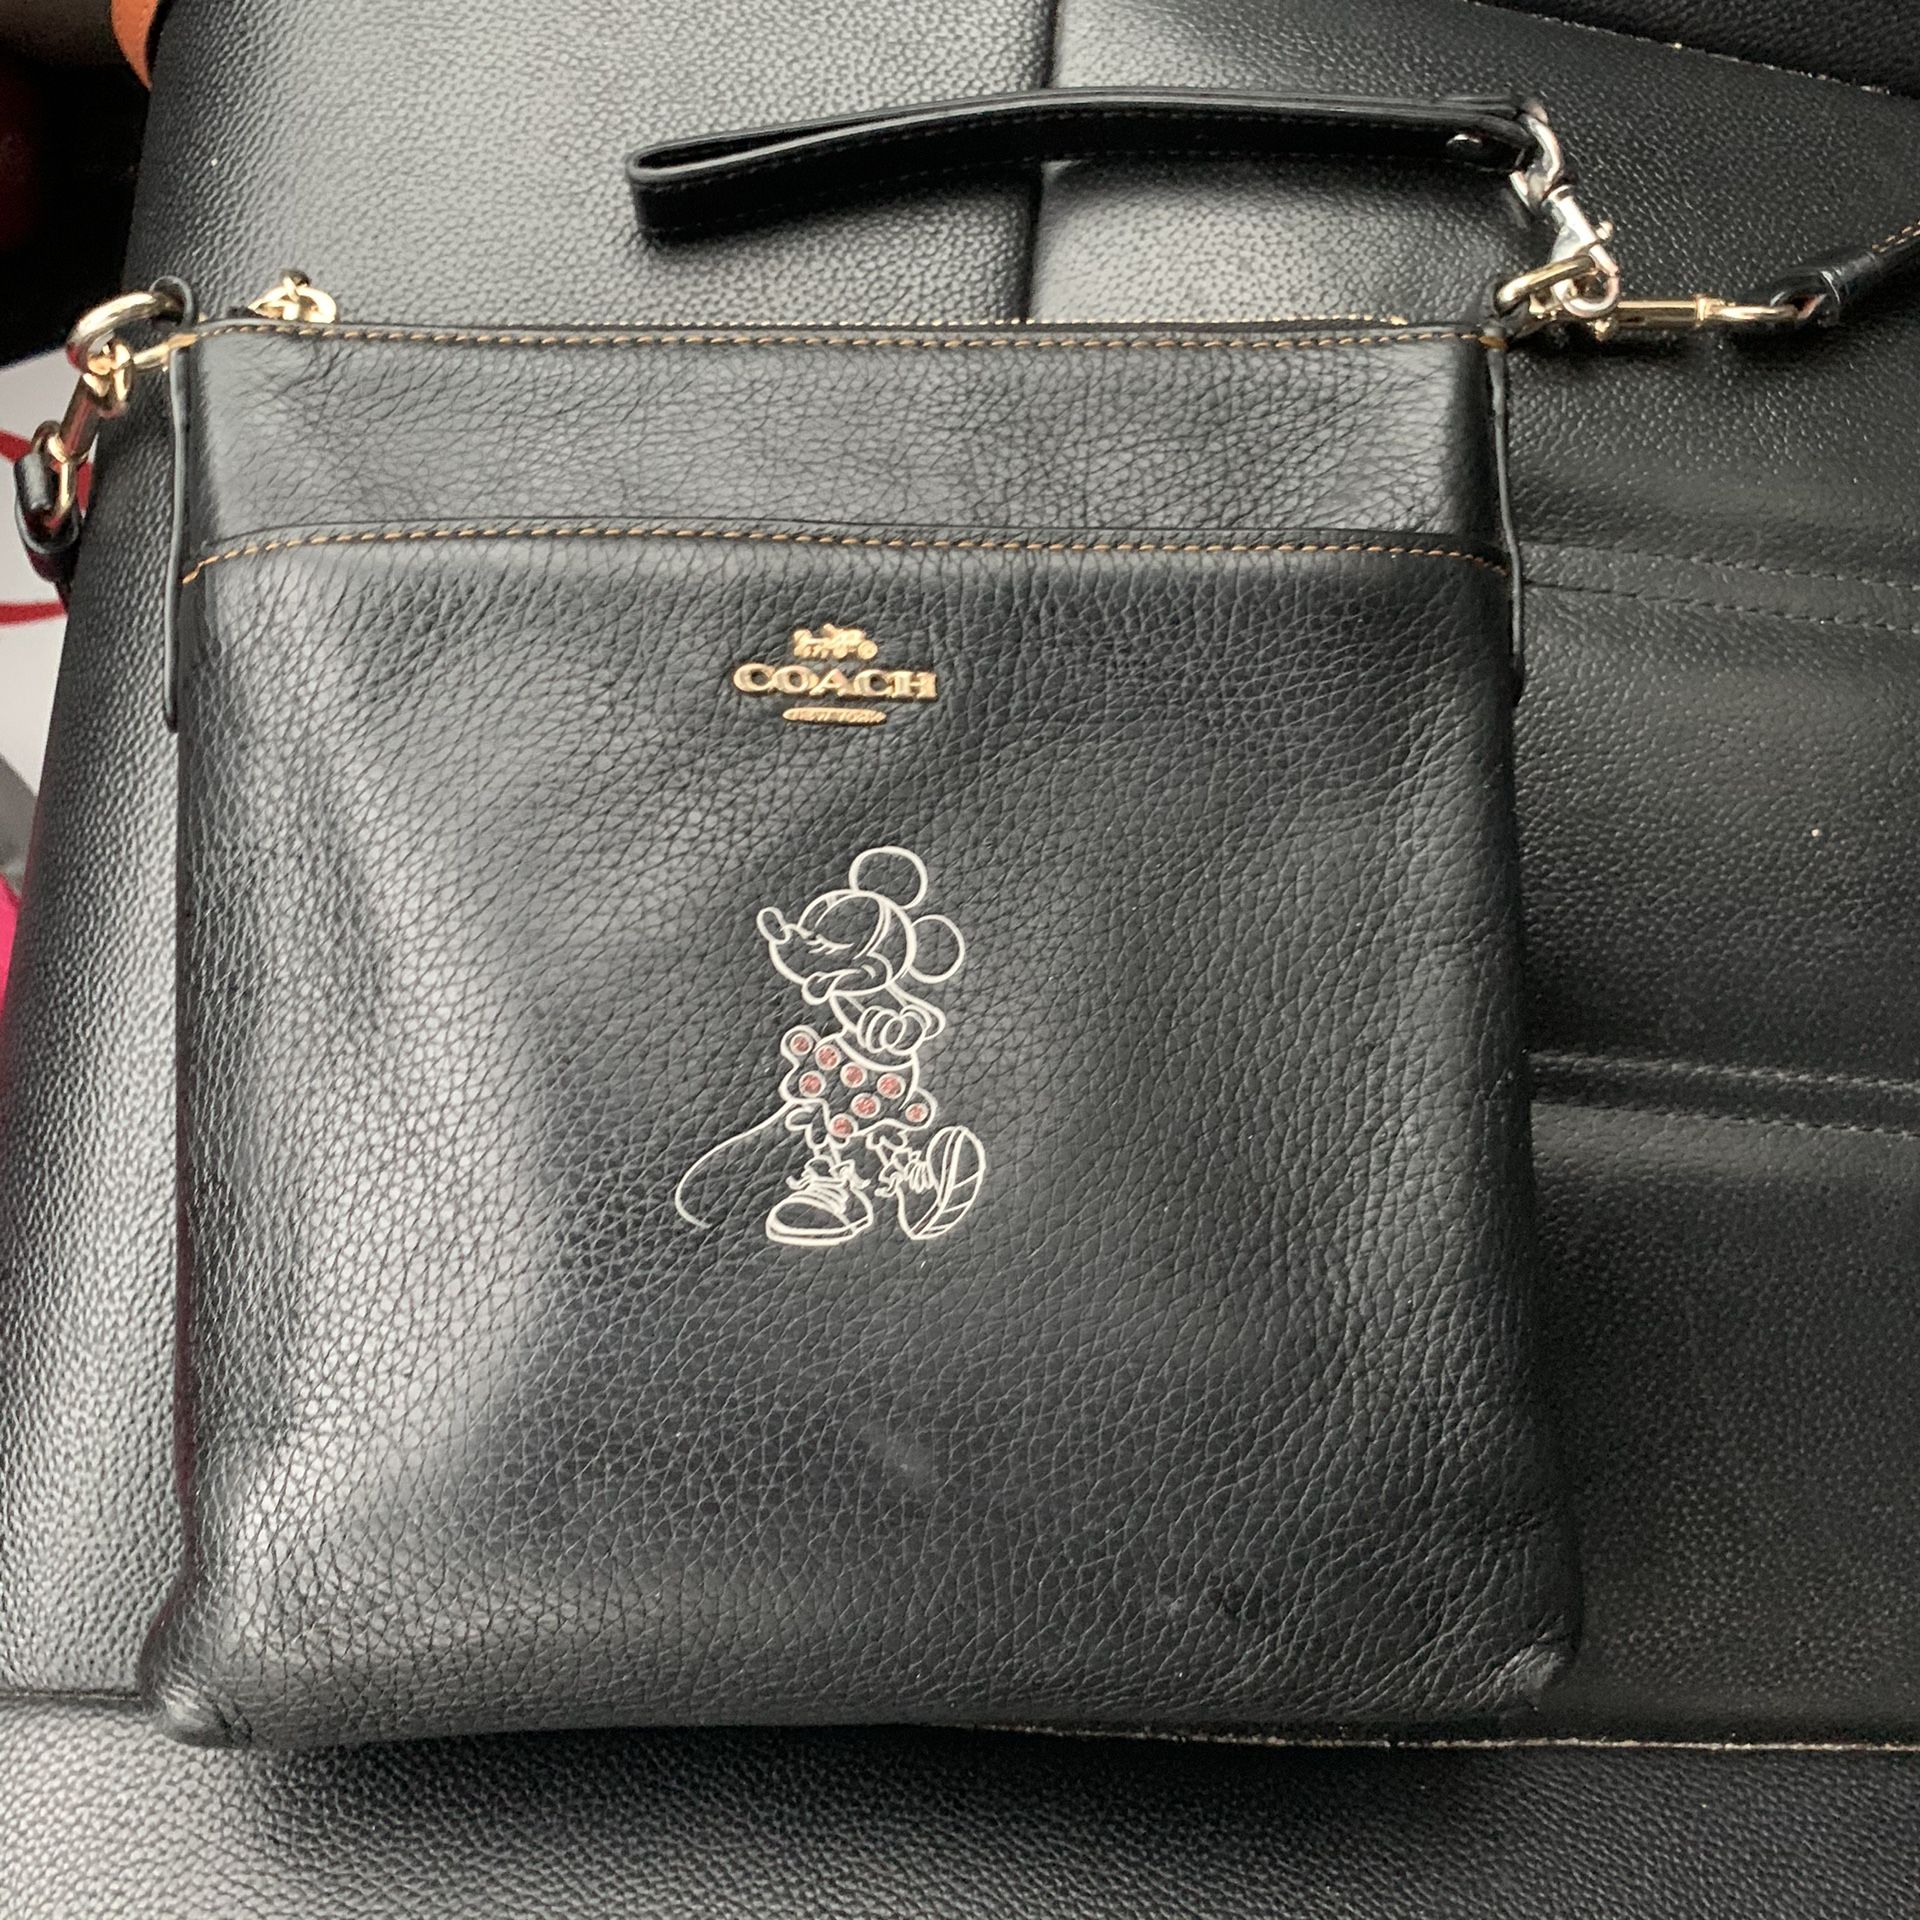 Coach Minnie Mouse purse